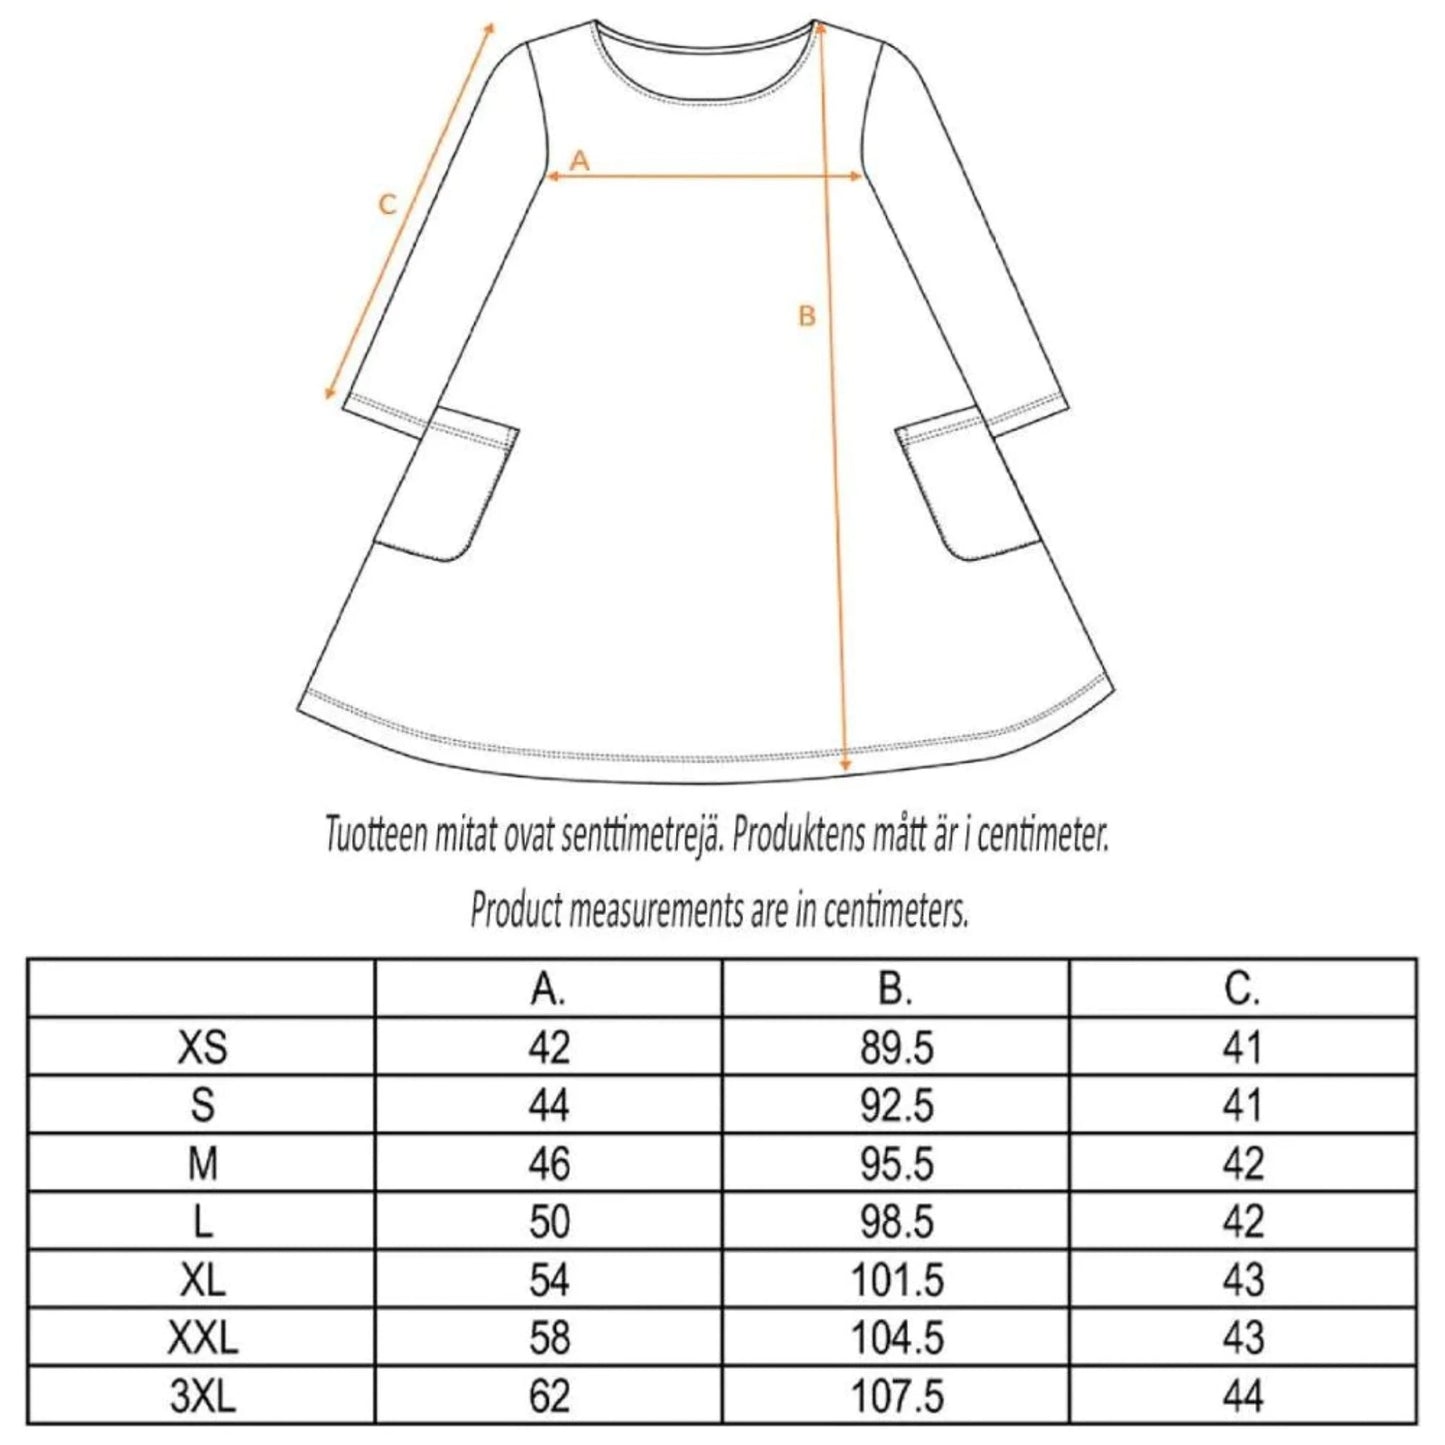 Moomin Women's Tunic, Siimes (8908886769951)